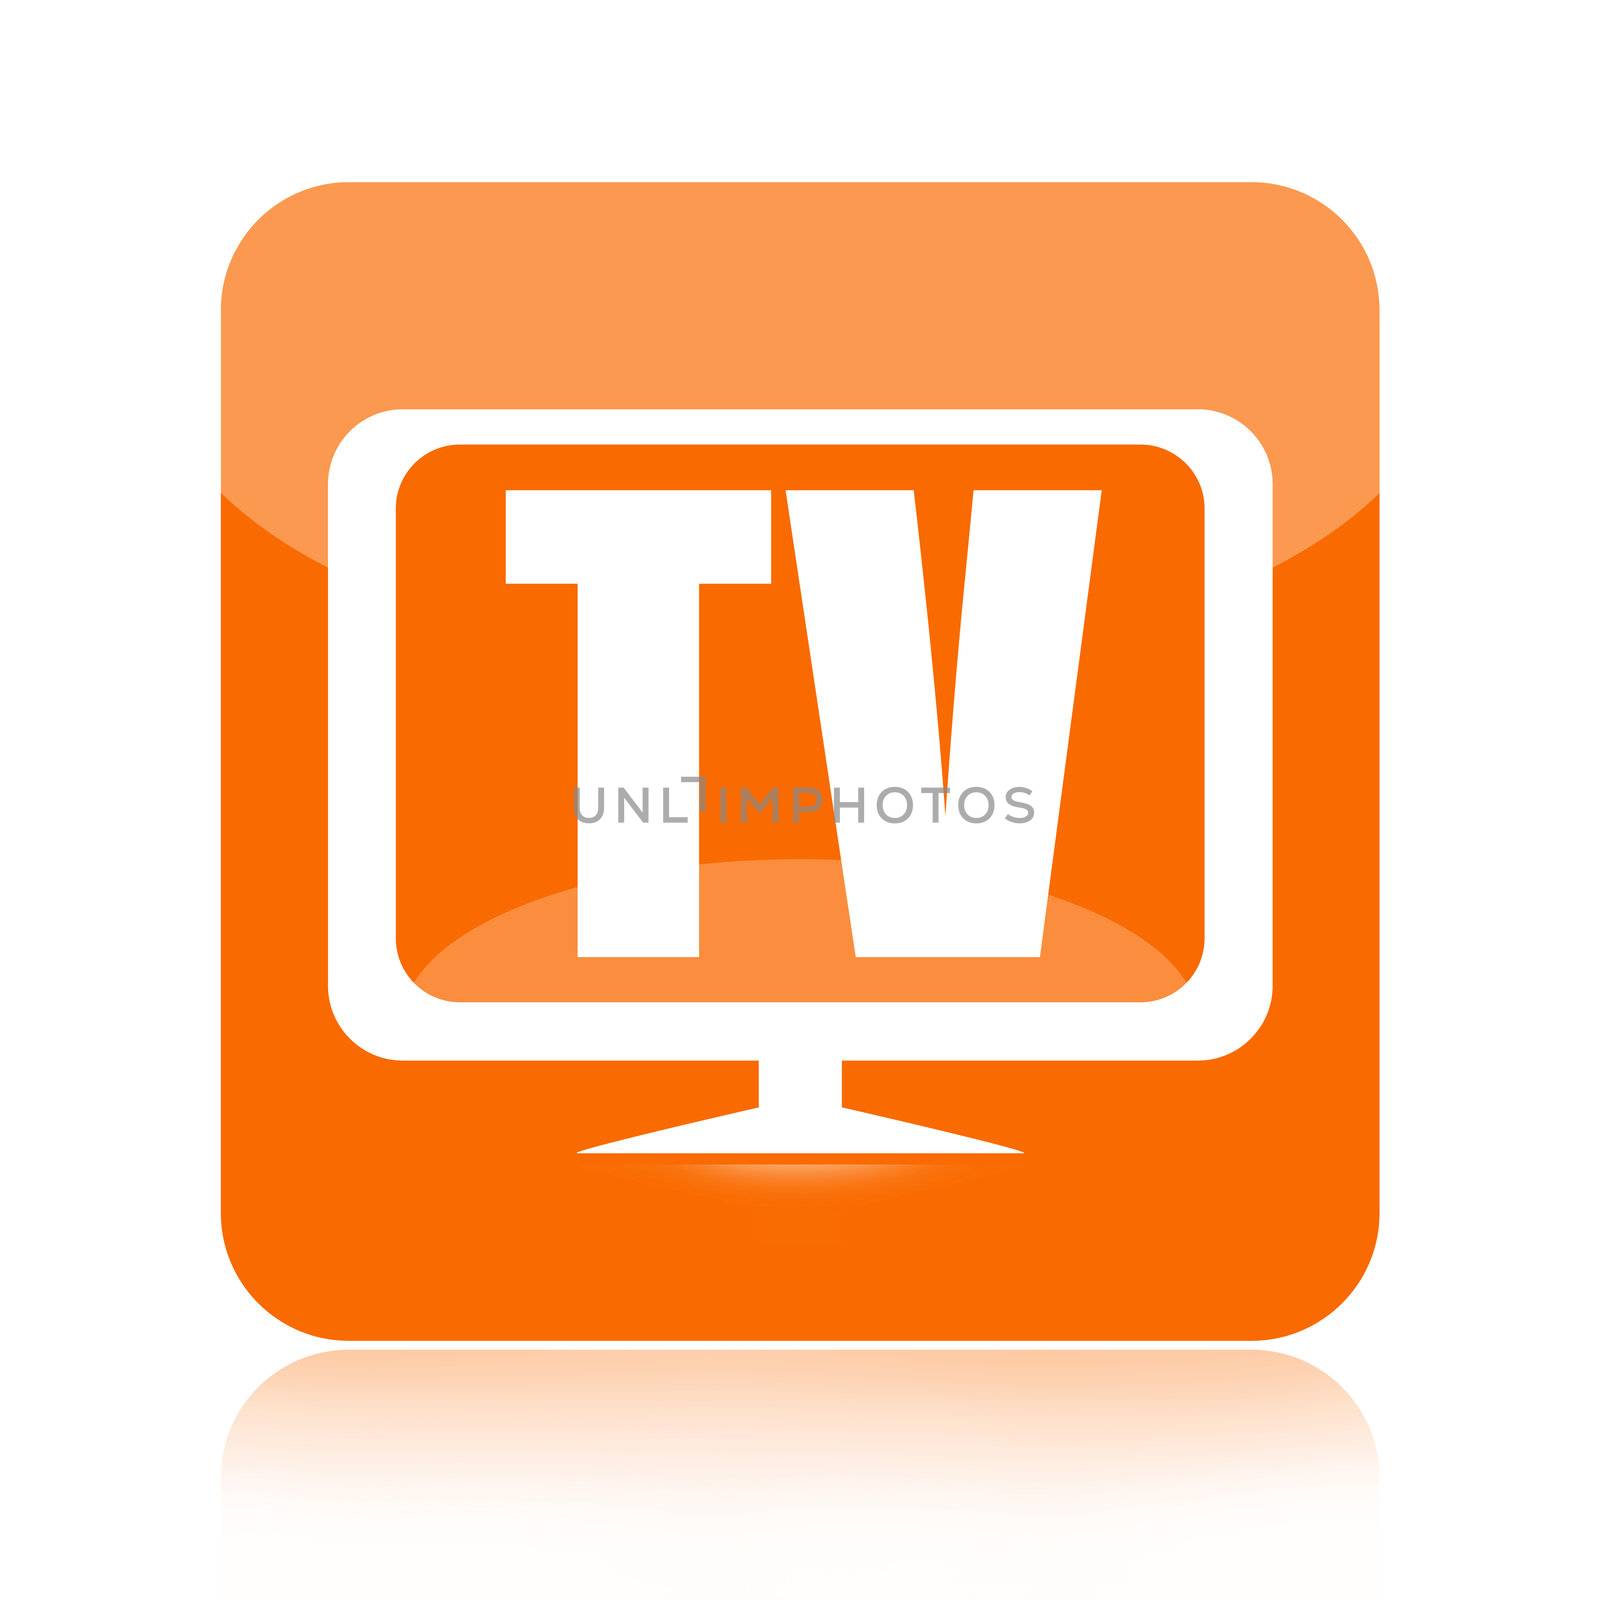 Television icon isolated on white background